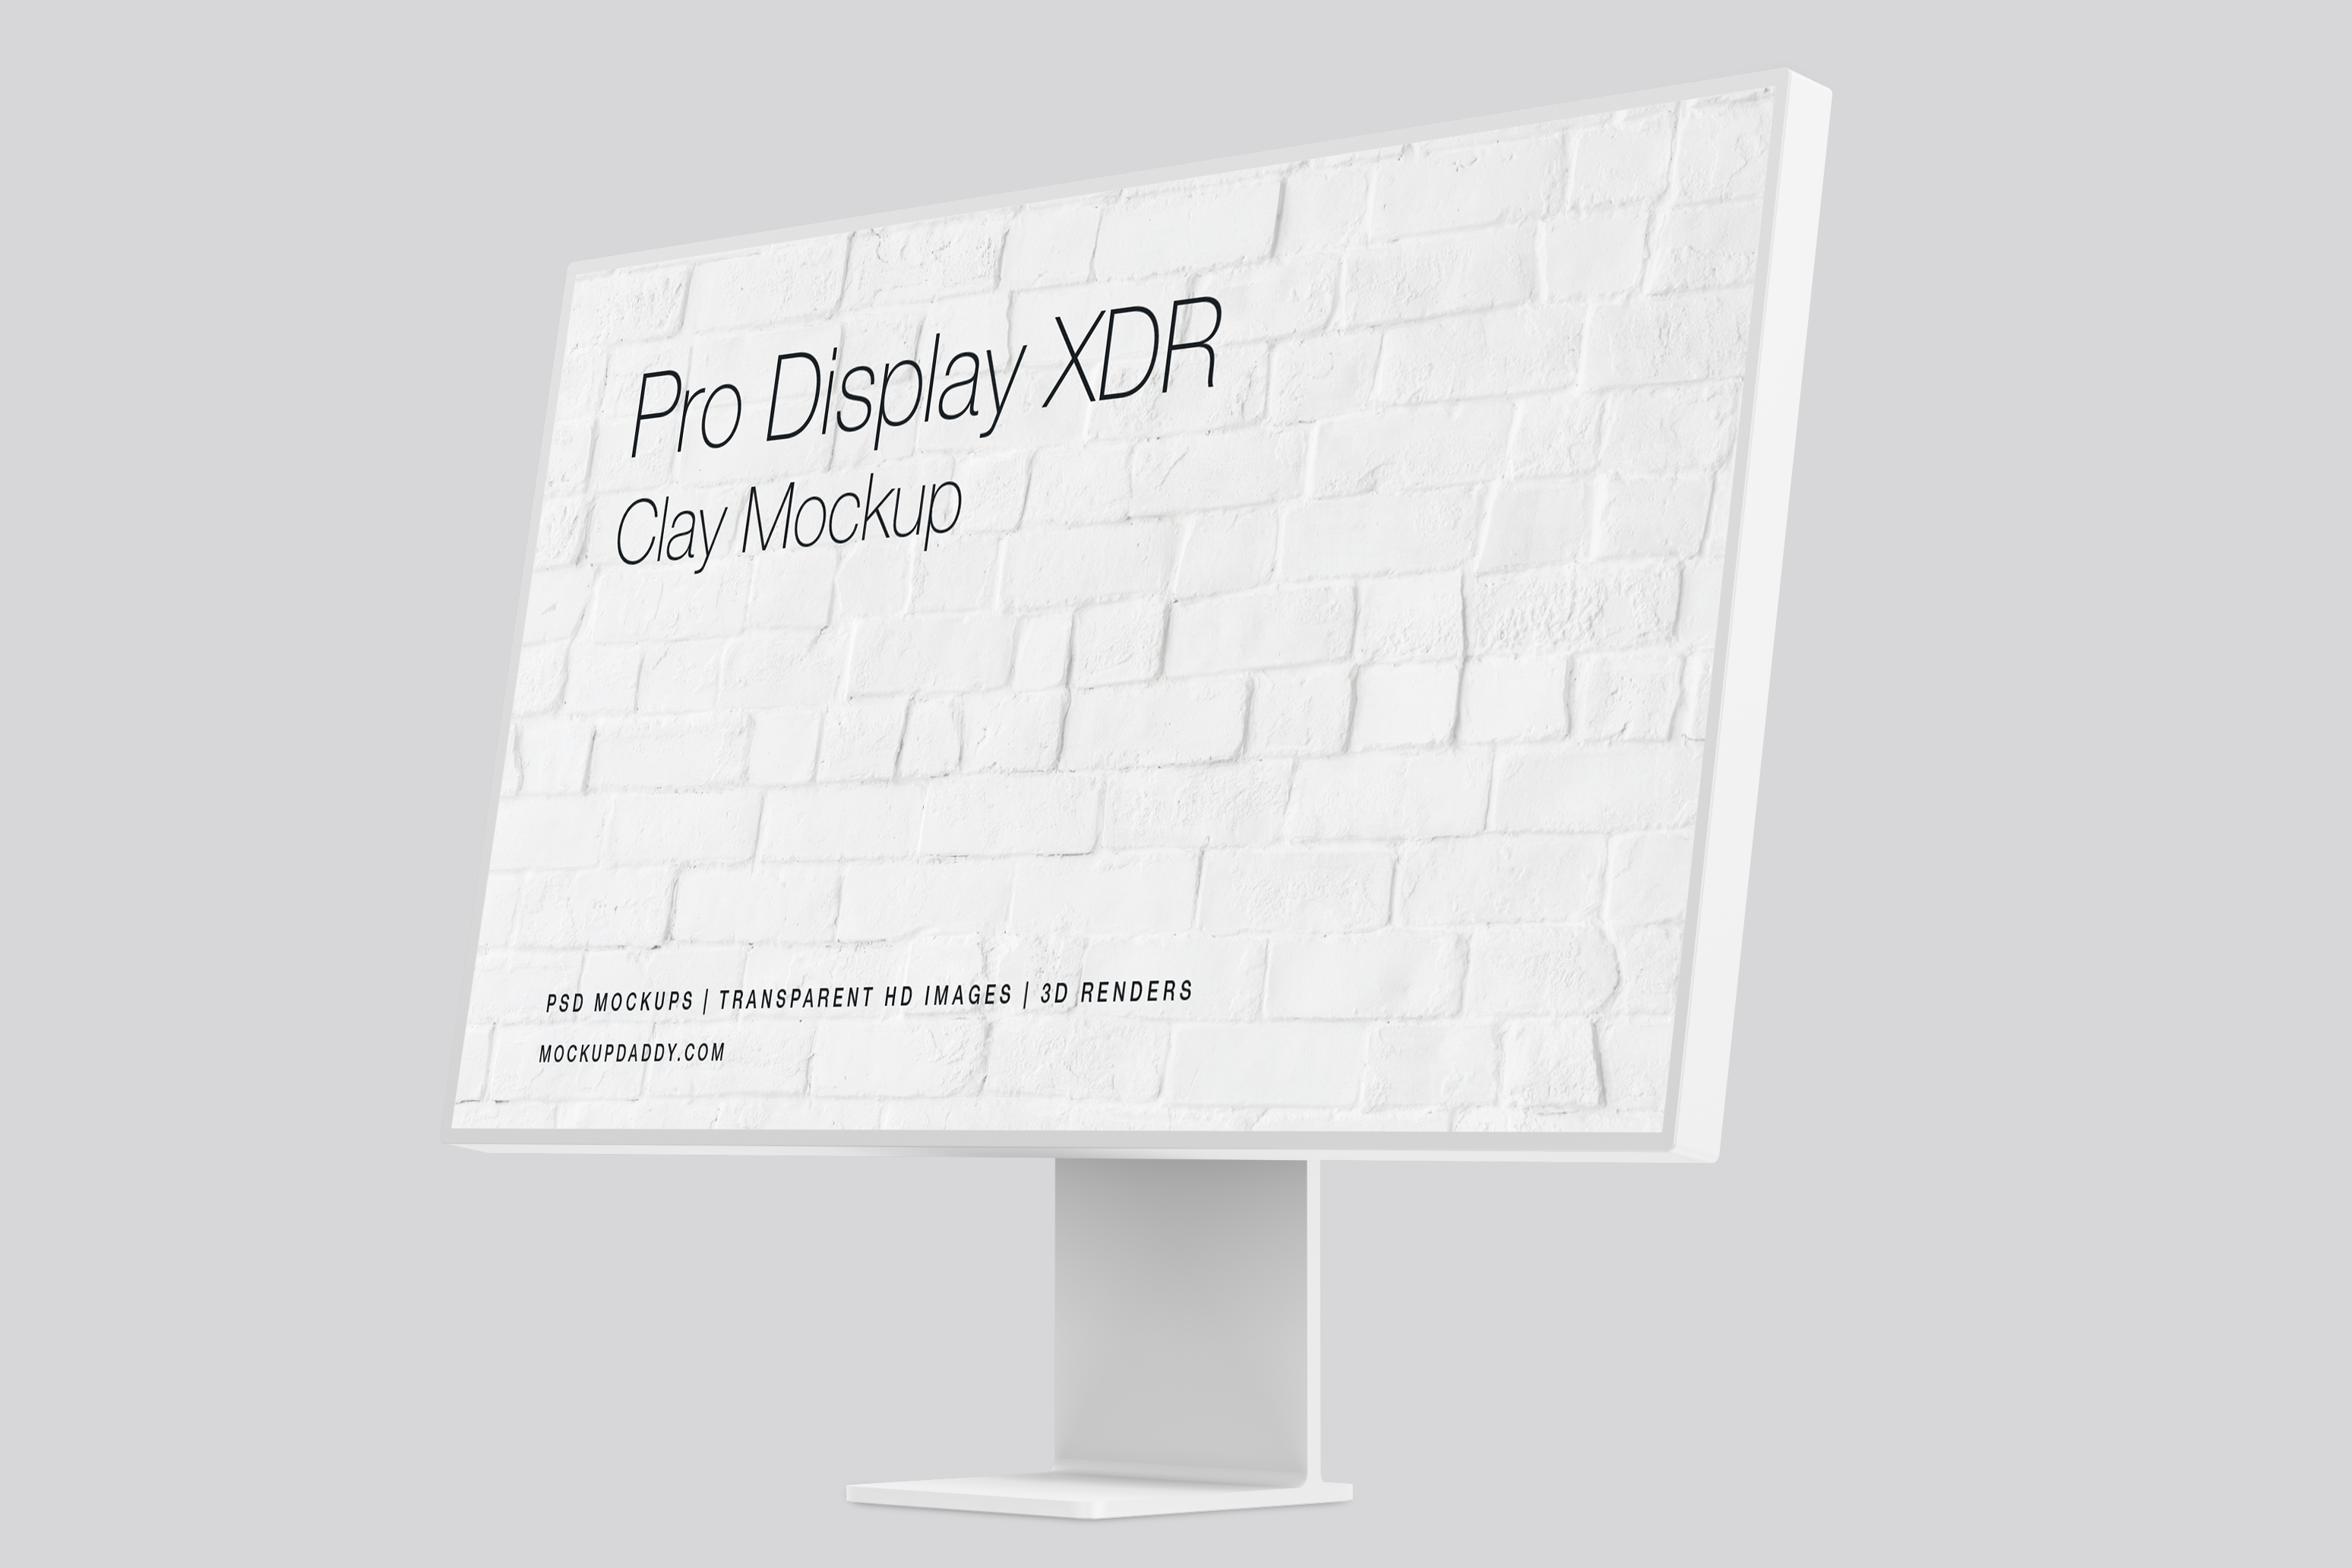 Apple Pro Display XDR Clay Mockup White